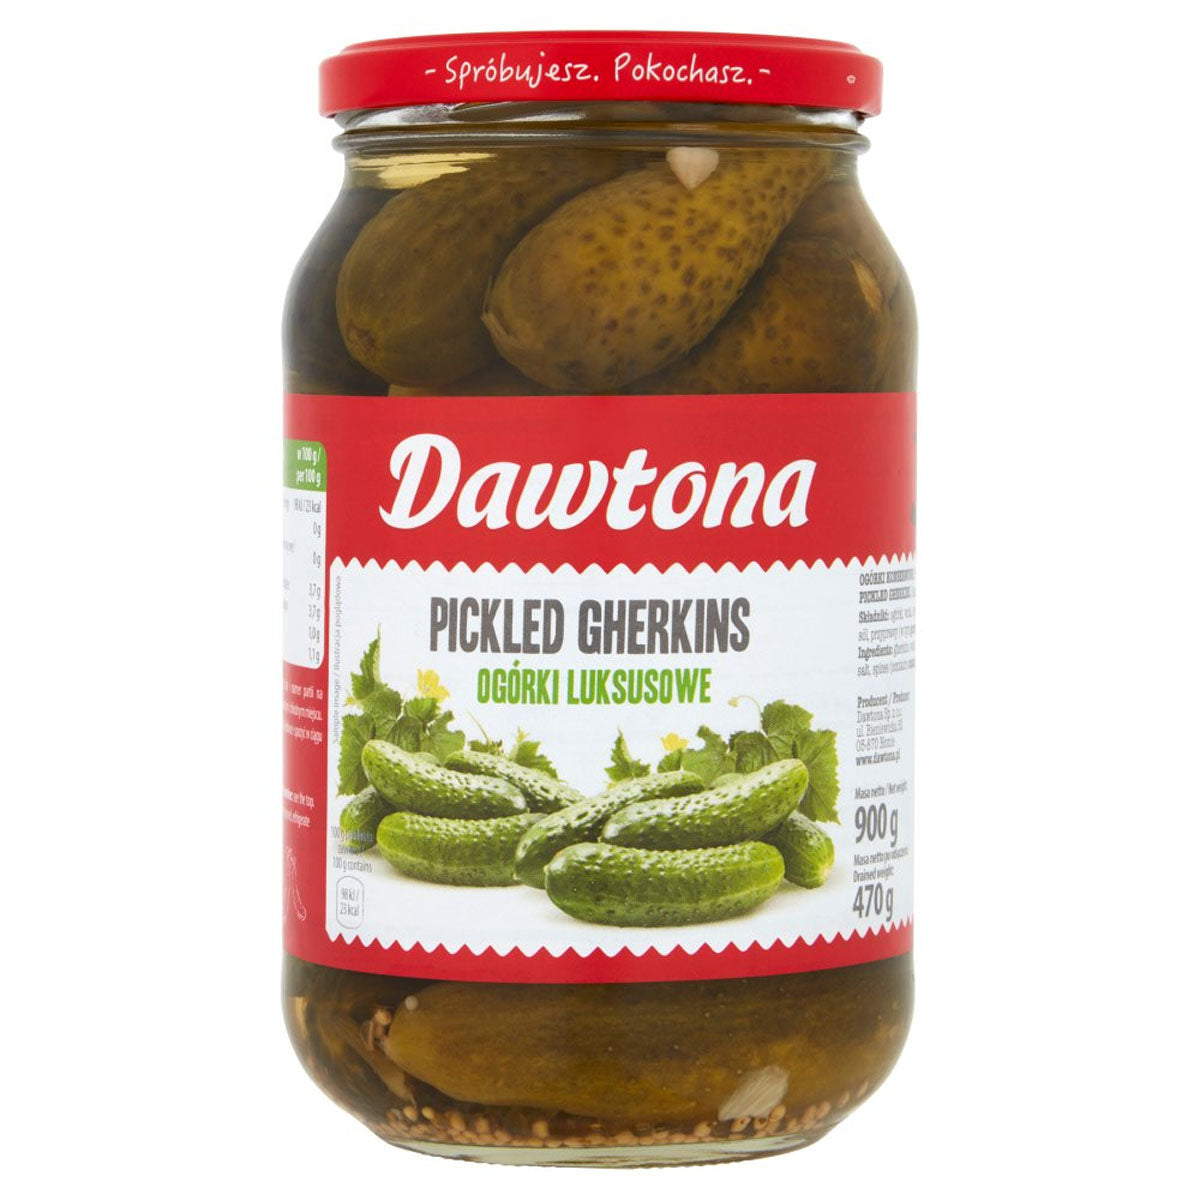 Dawtona - Pickled Gherkins - 900g - Continental Food Store